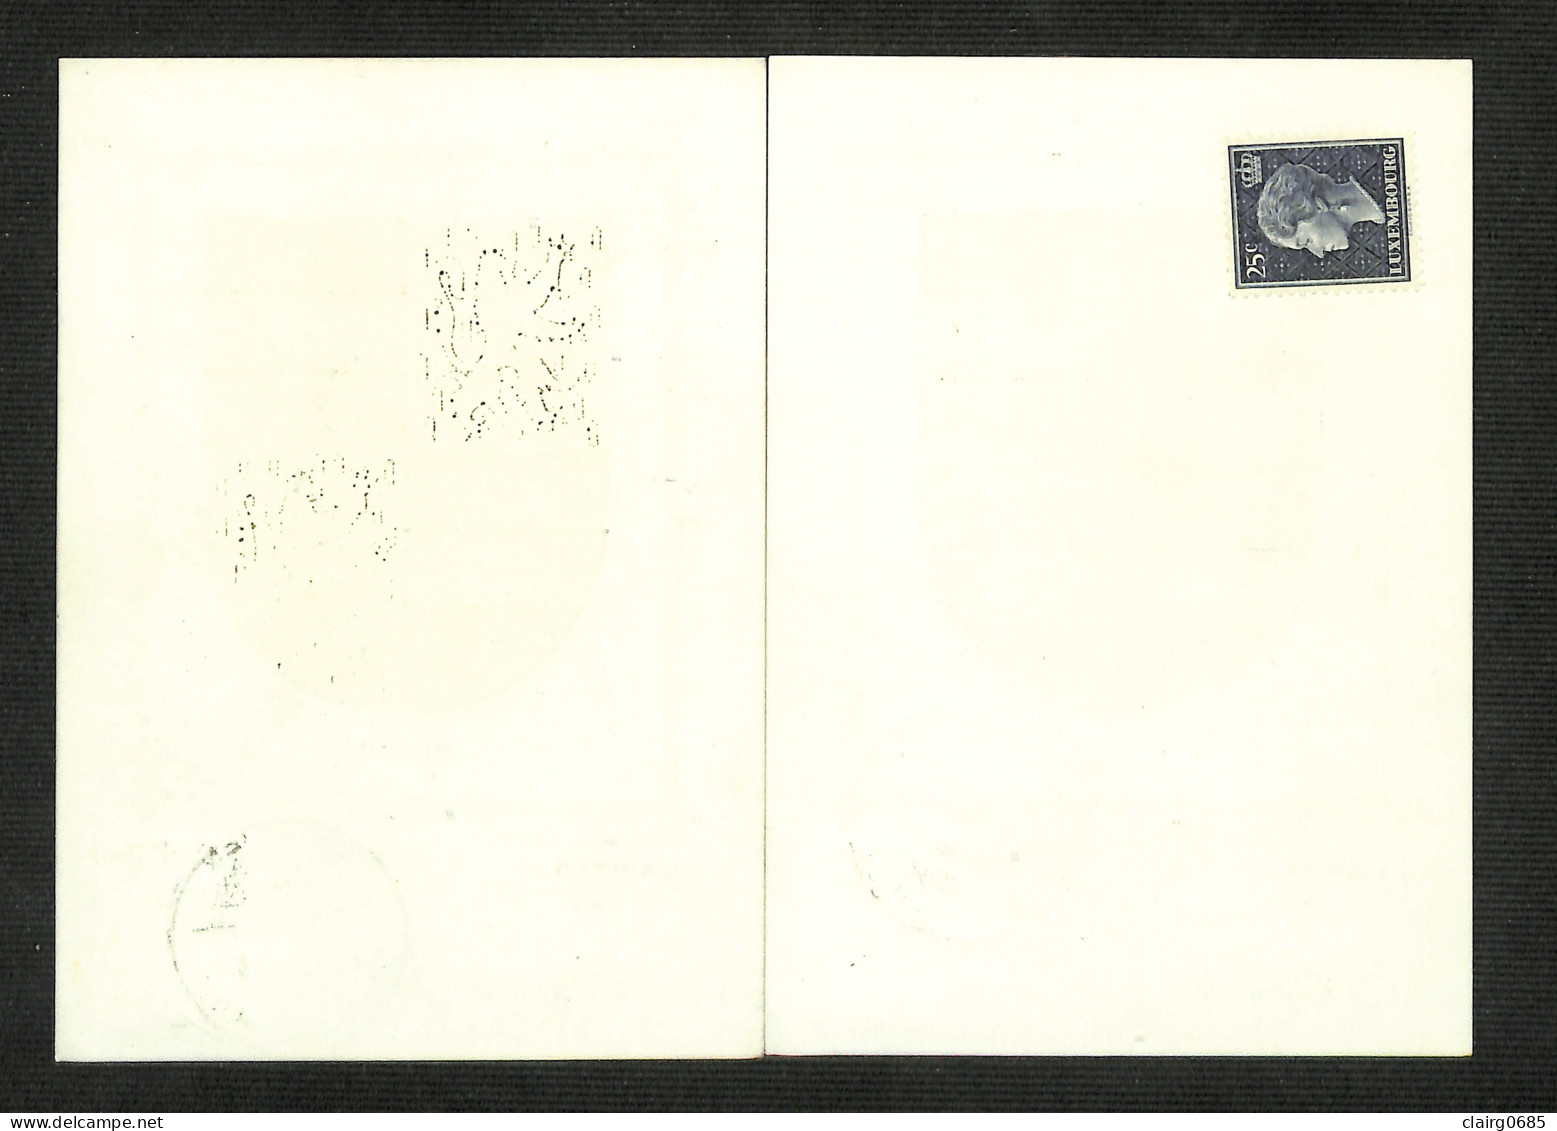 LUXEMBOURG - 2 Cartes MAXIMUM 1958 - Armoiries - VIANDEN - MERSCH - Cartes Maximum